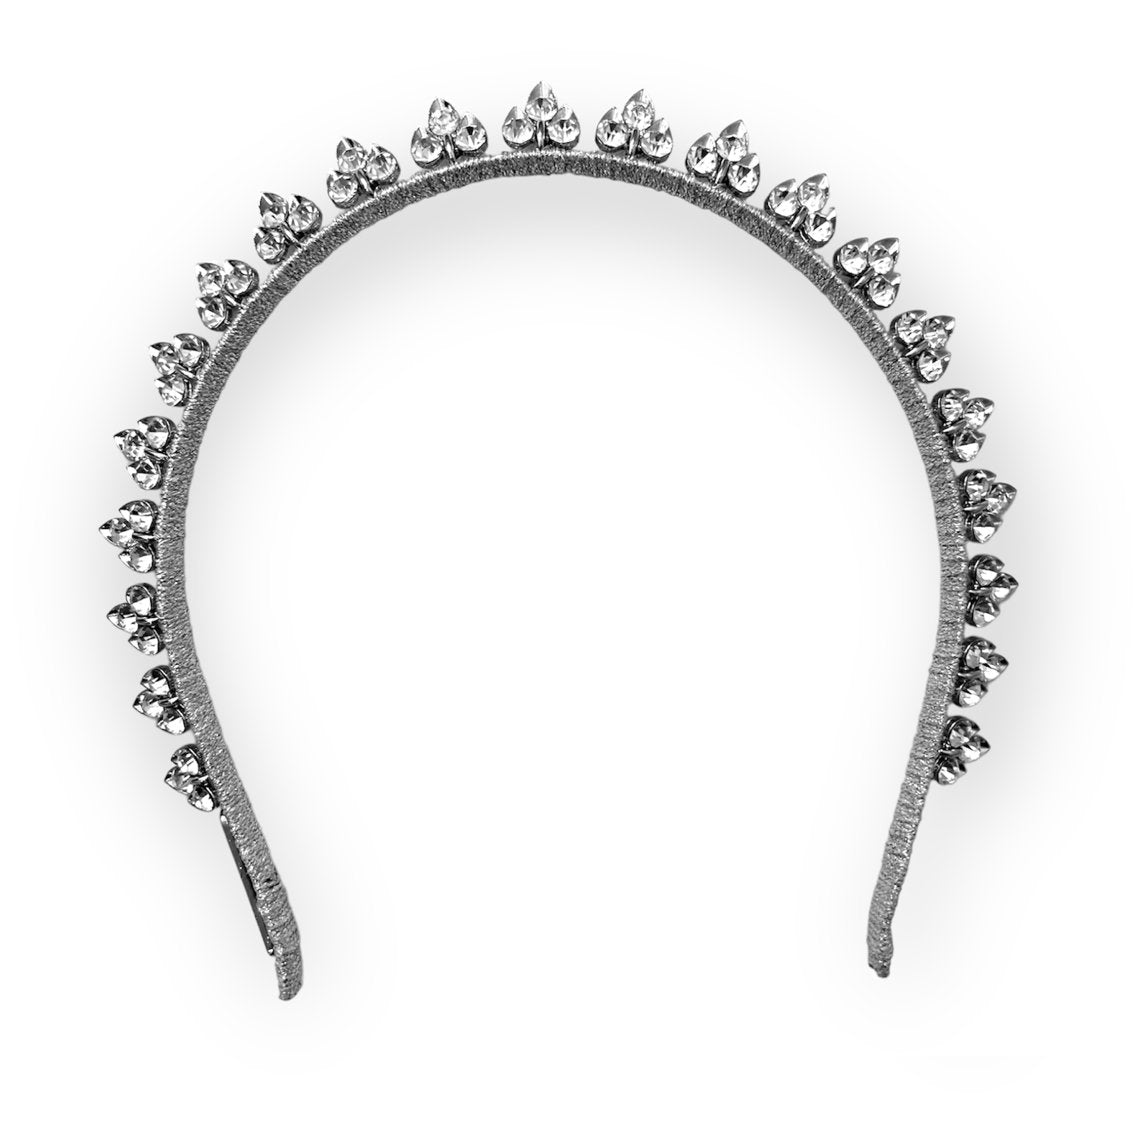 The Layered Silver Zenni Crown